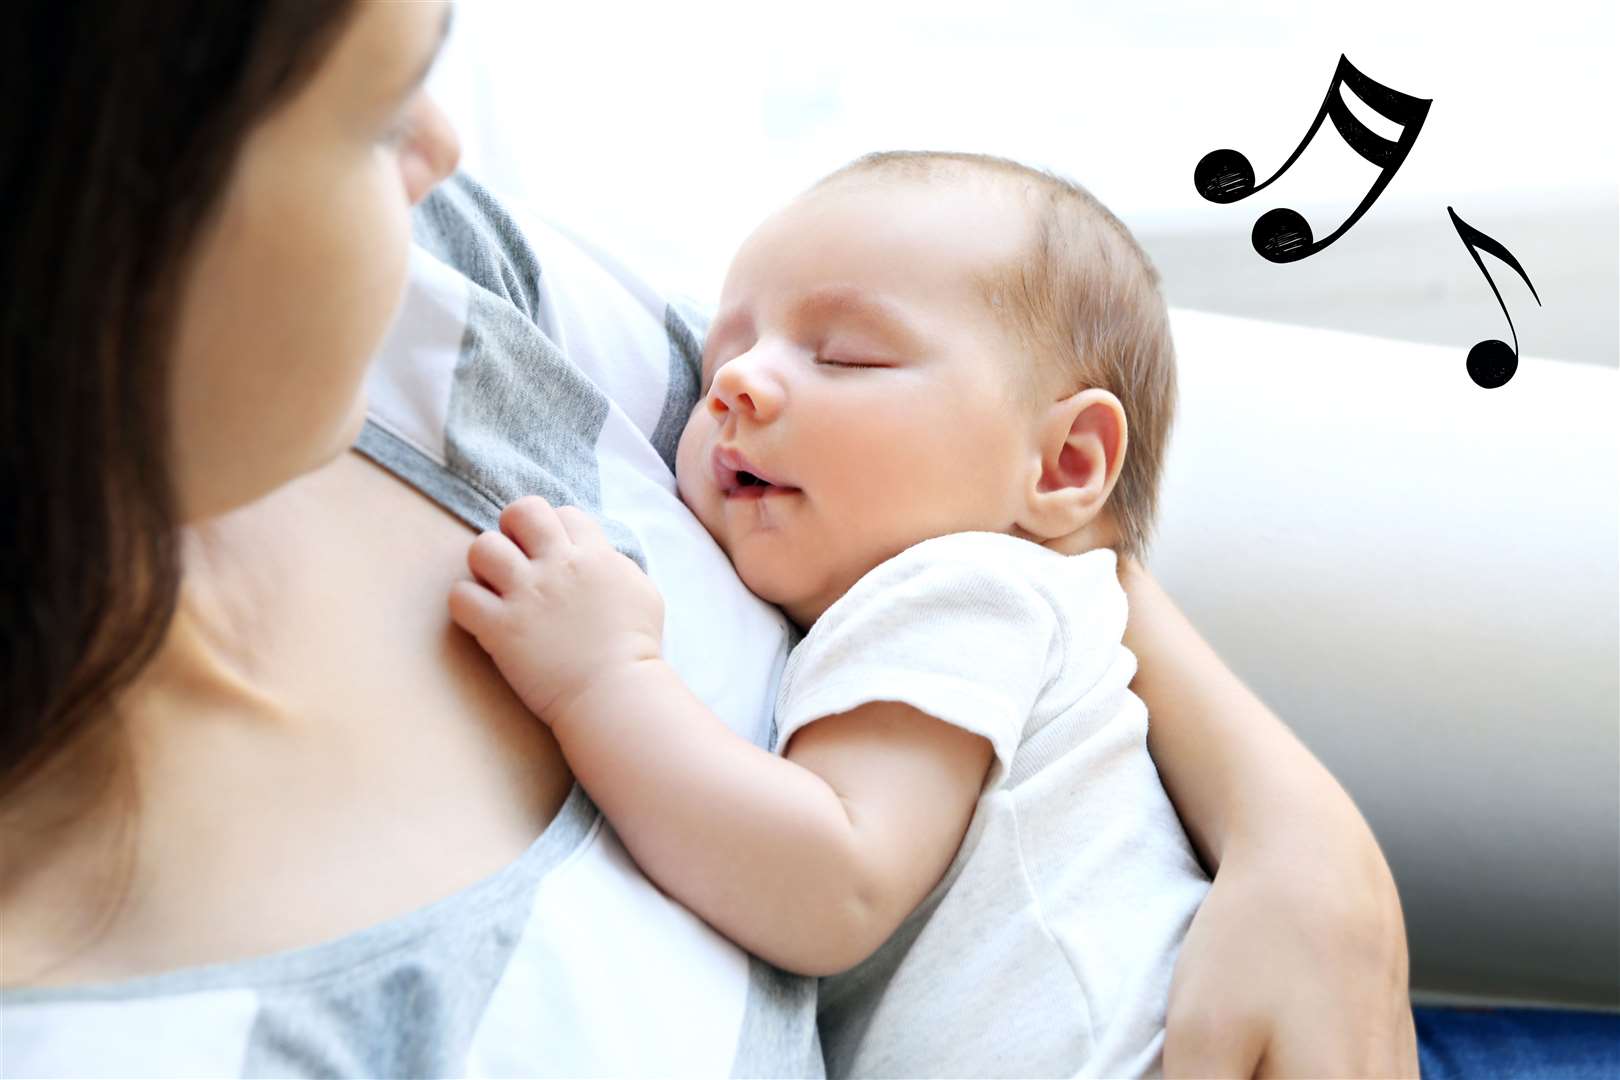 Lullabies help mother and baby bond.